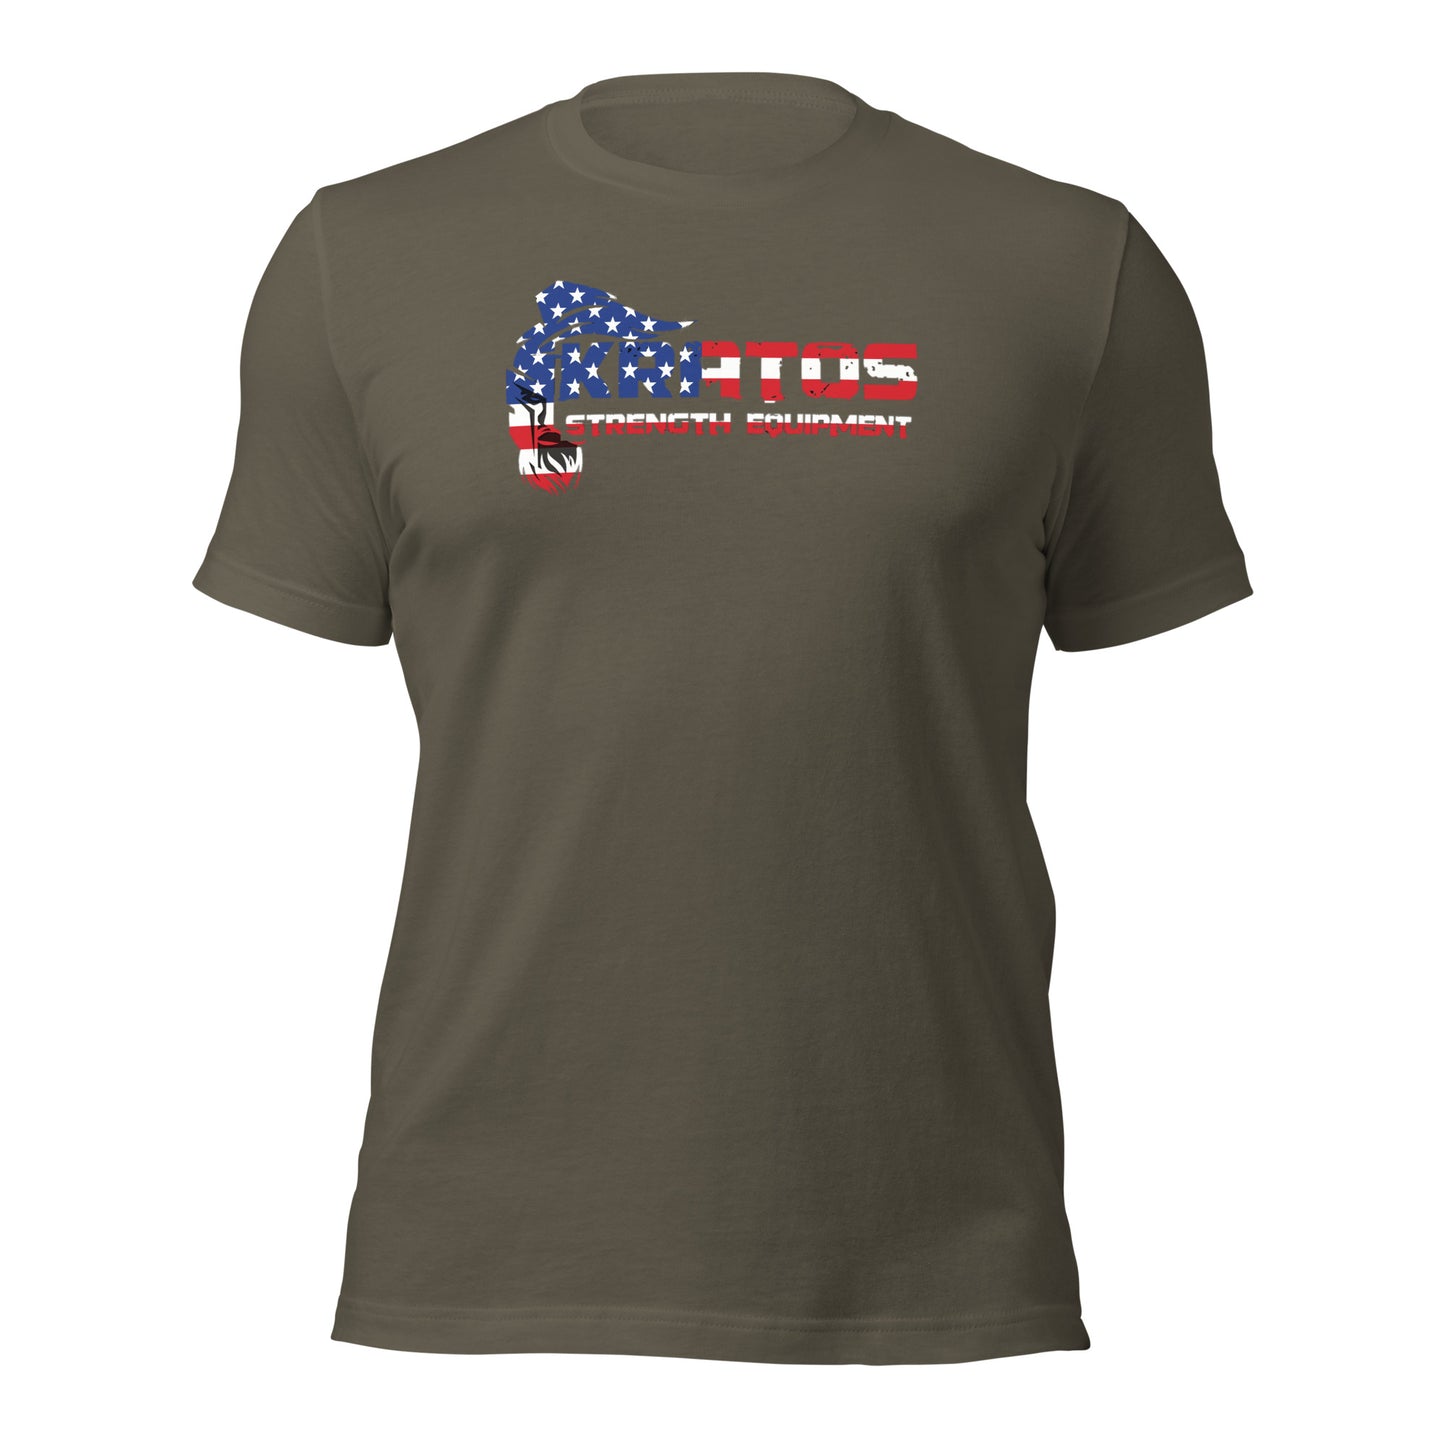 USA KRATOS Unisex t-shirt